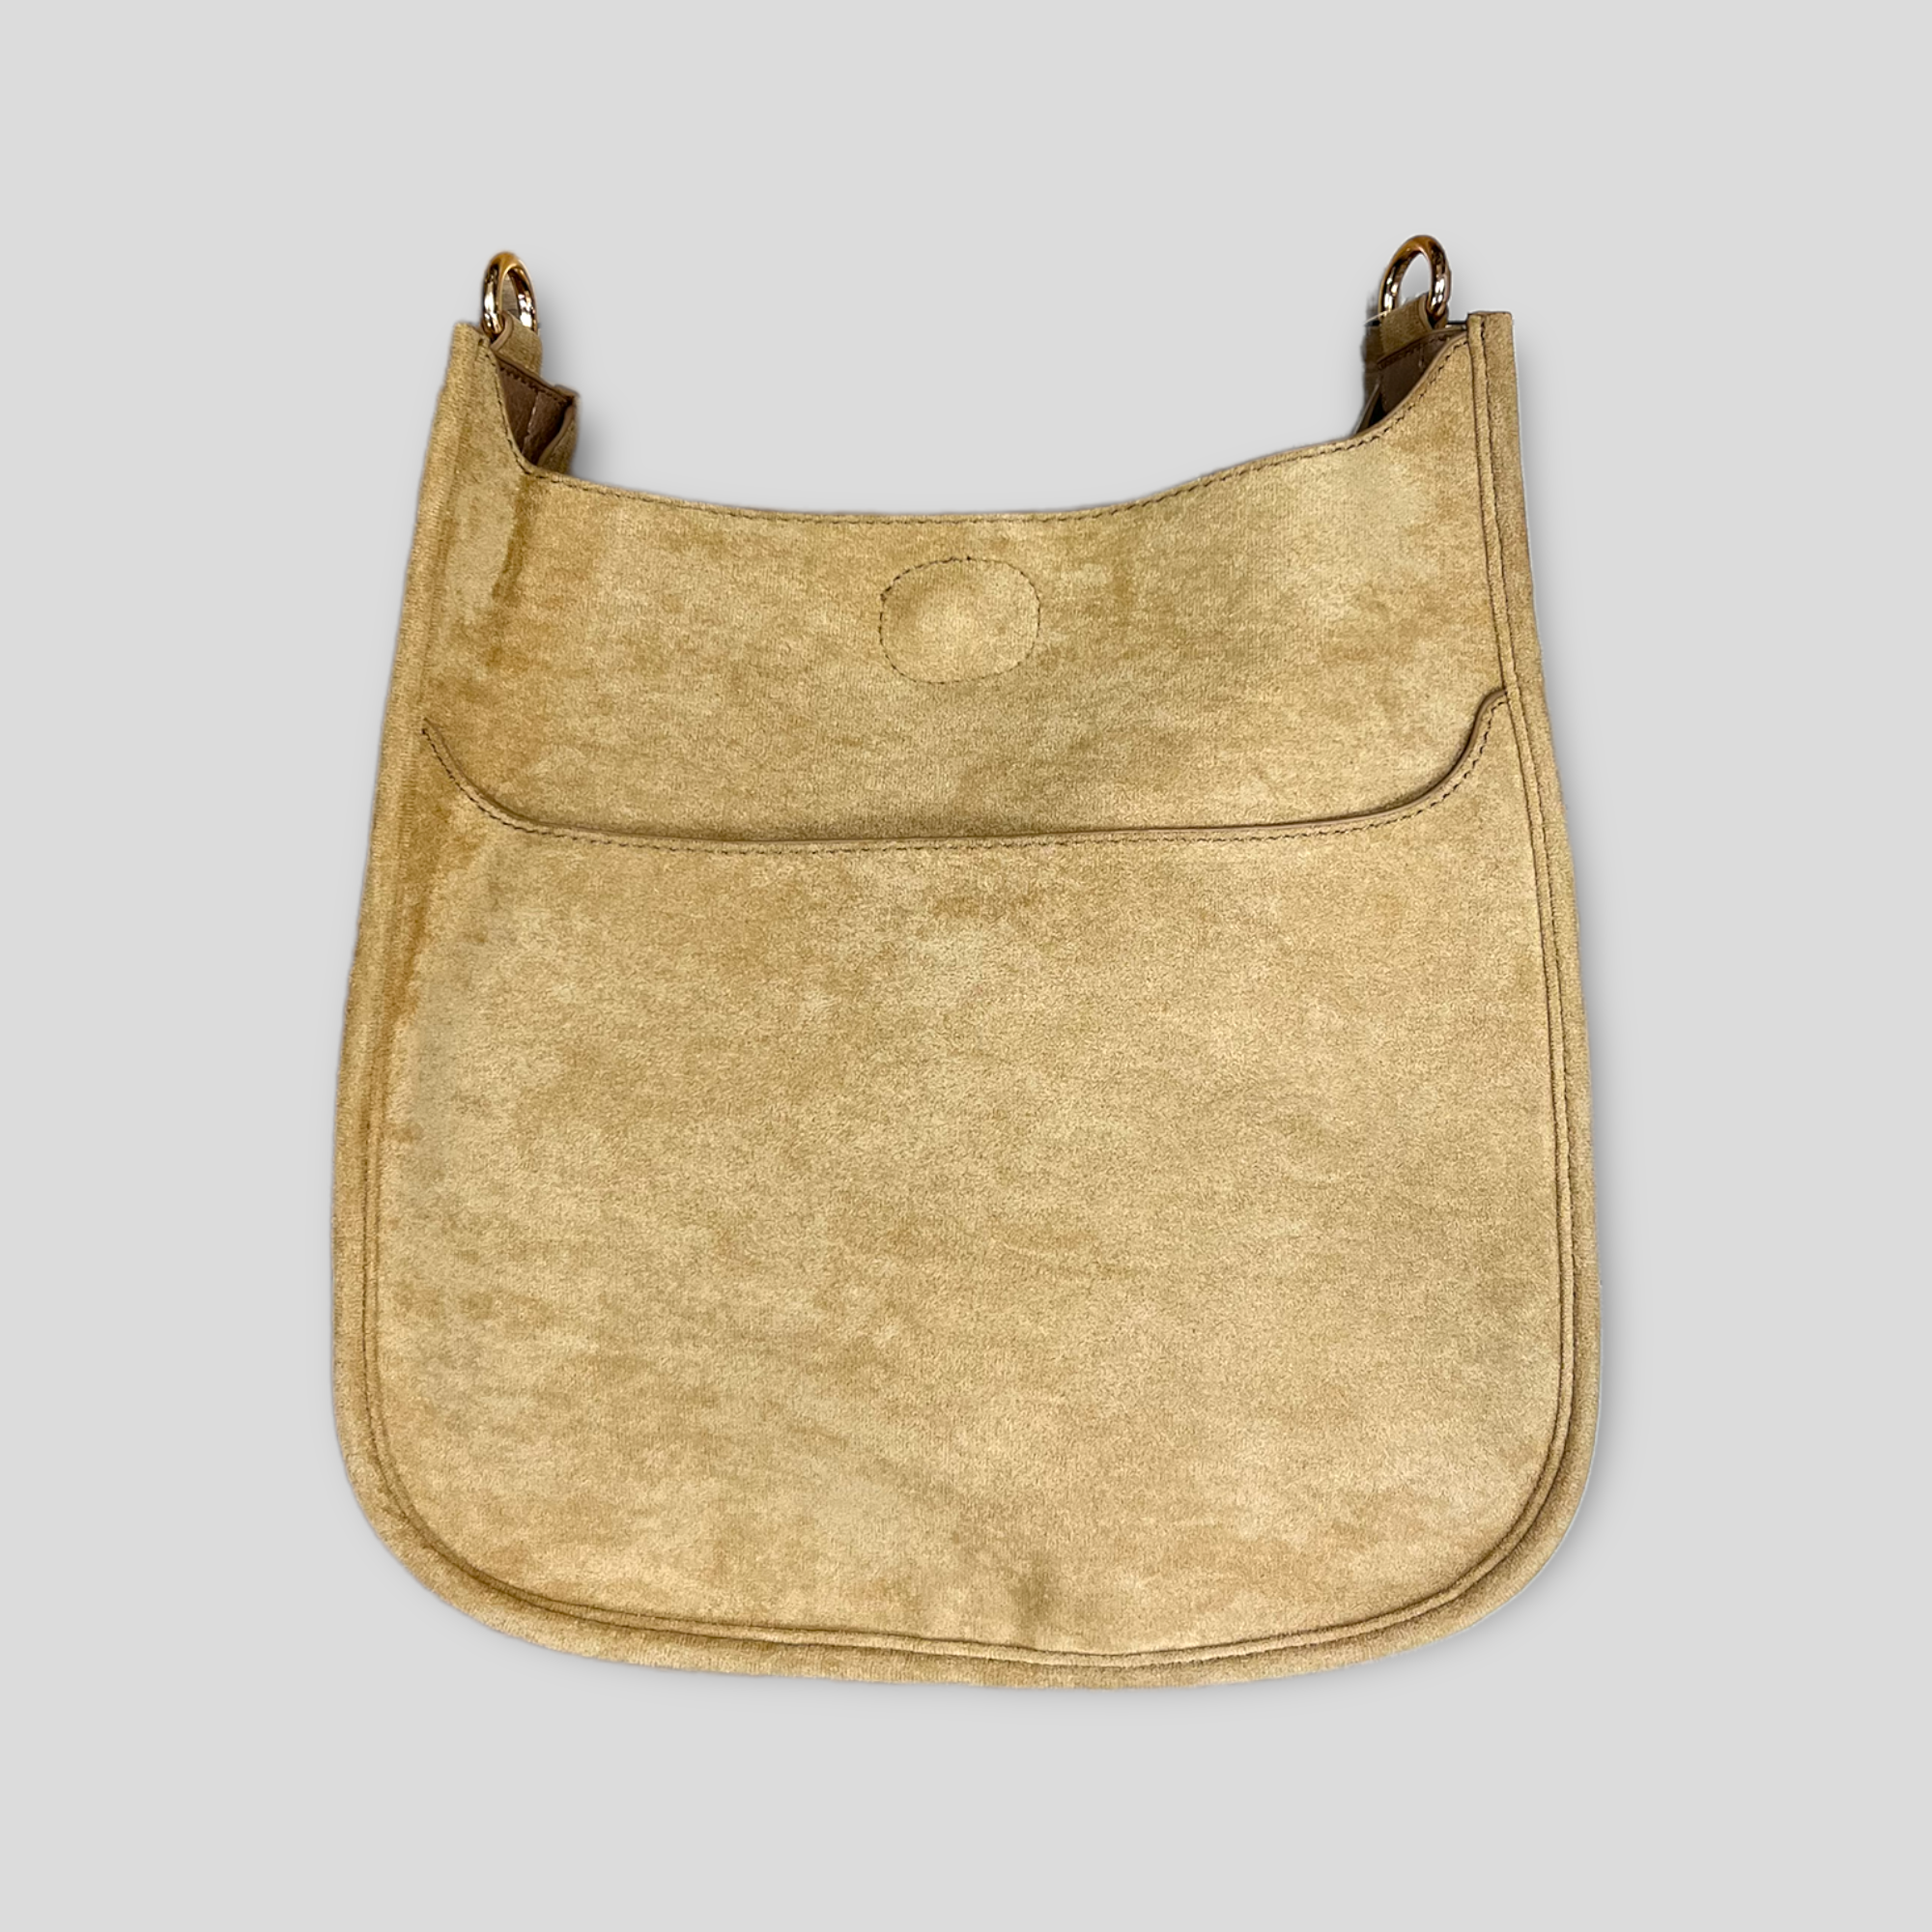 Ahdorned Vegan Leather Camel Messenger Bag w/2 Embroidered Strap - Camel/Gold at ShopTheAddison